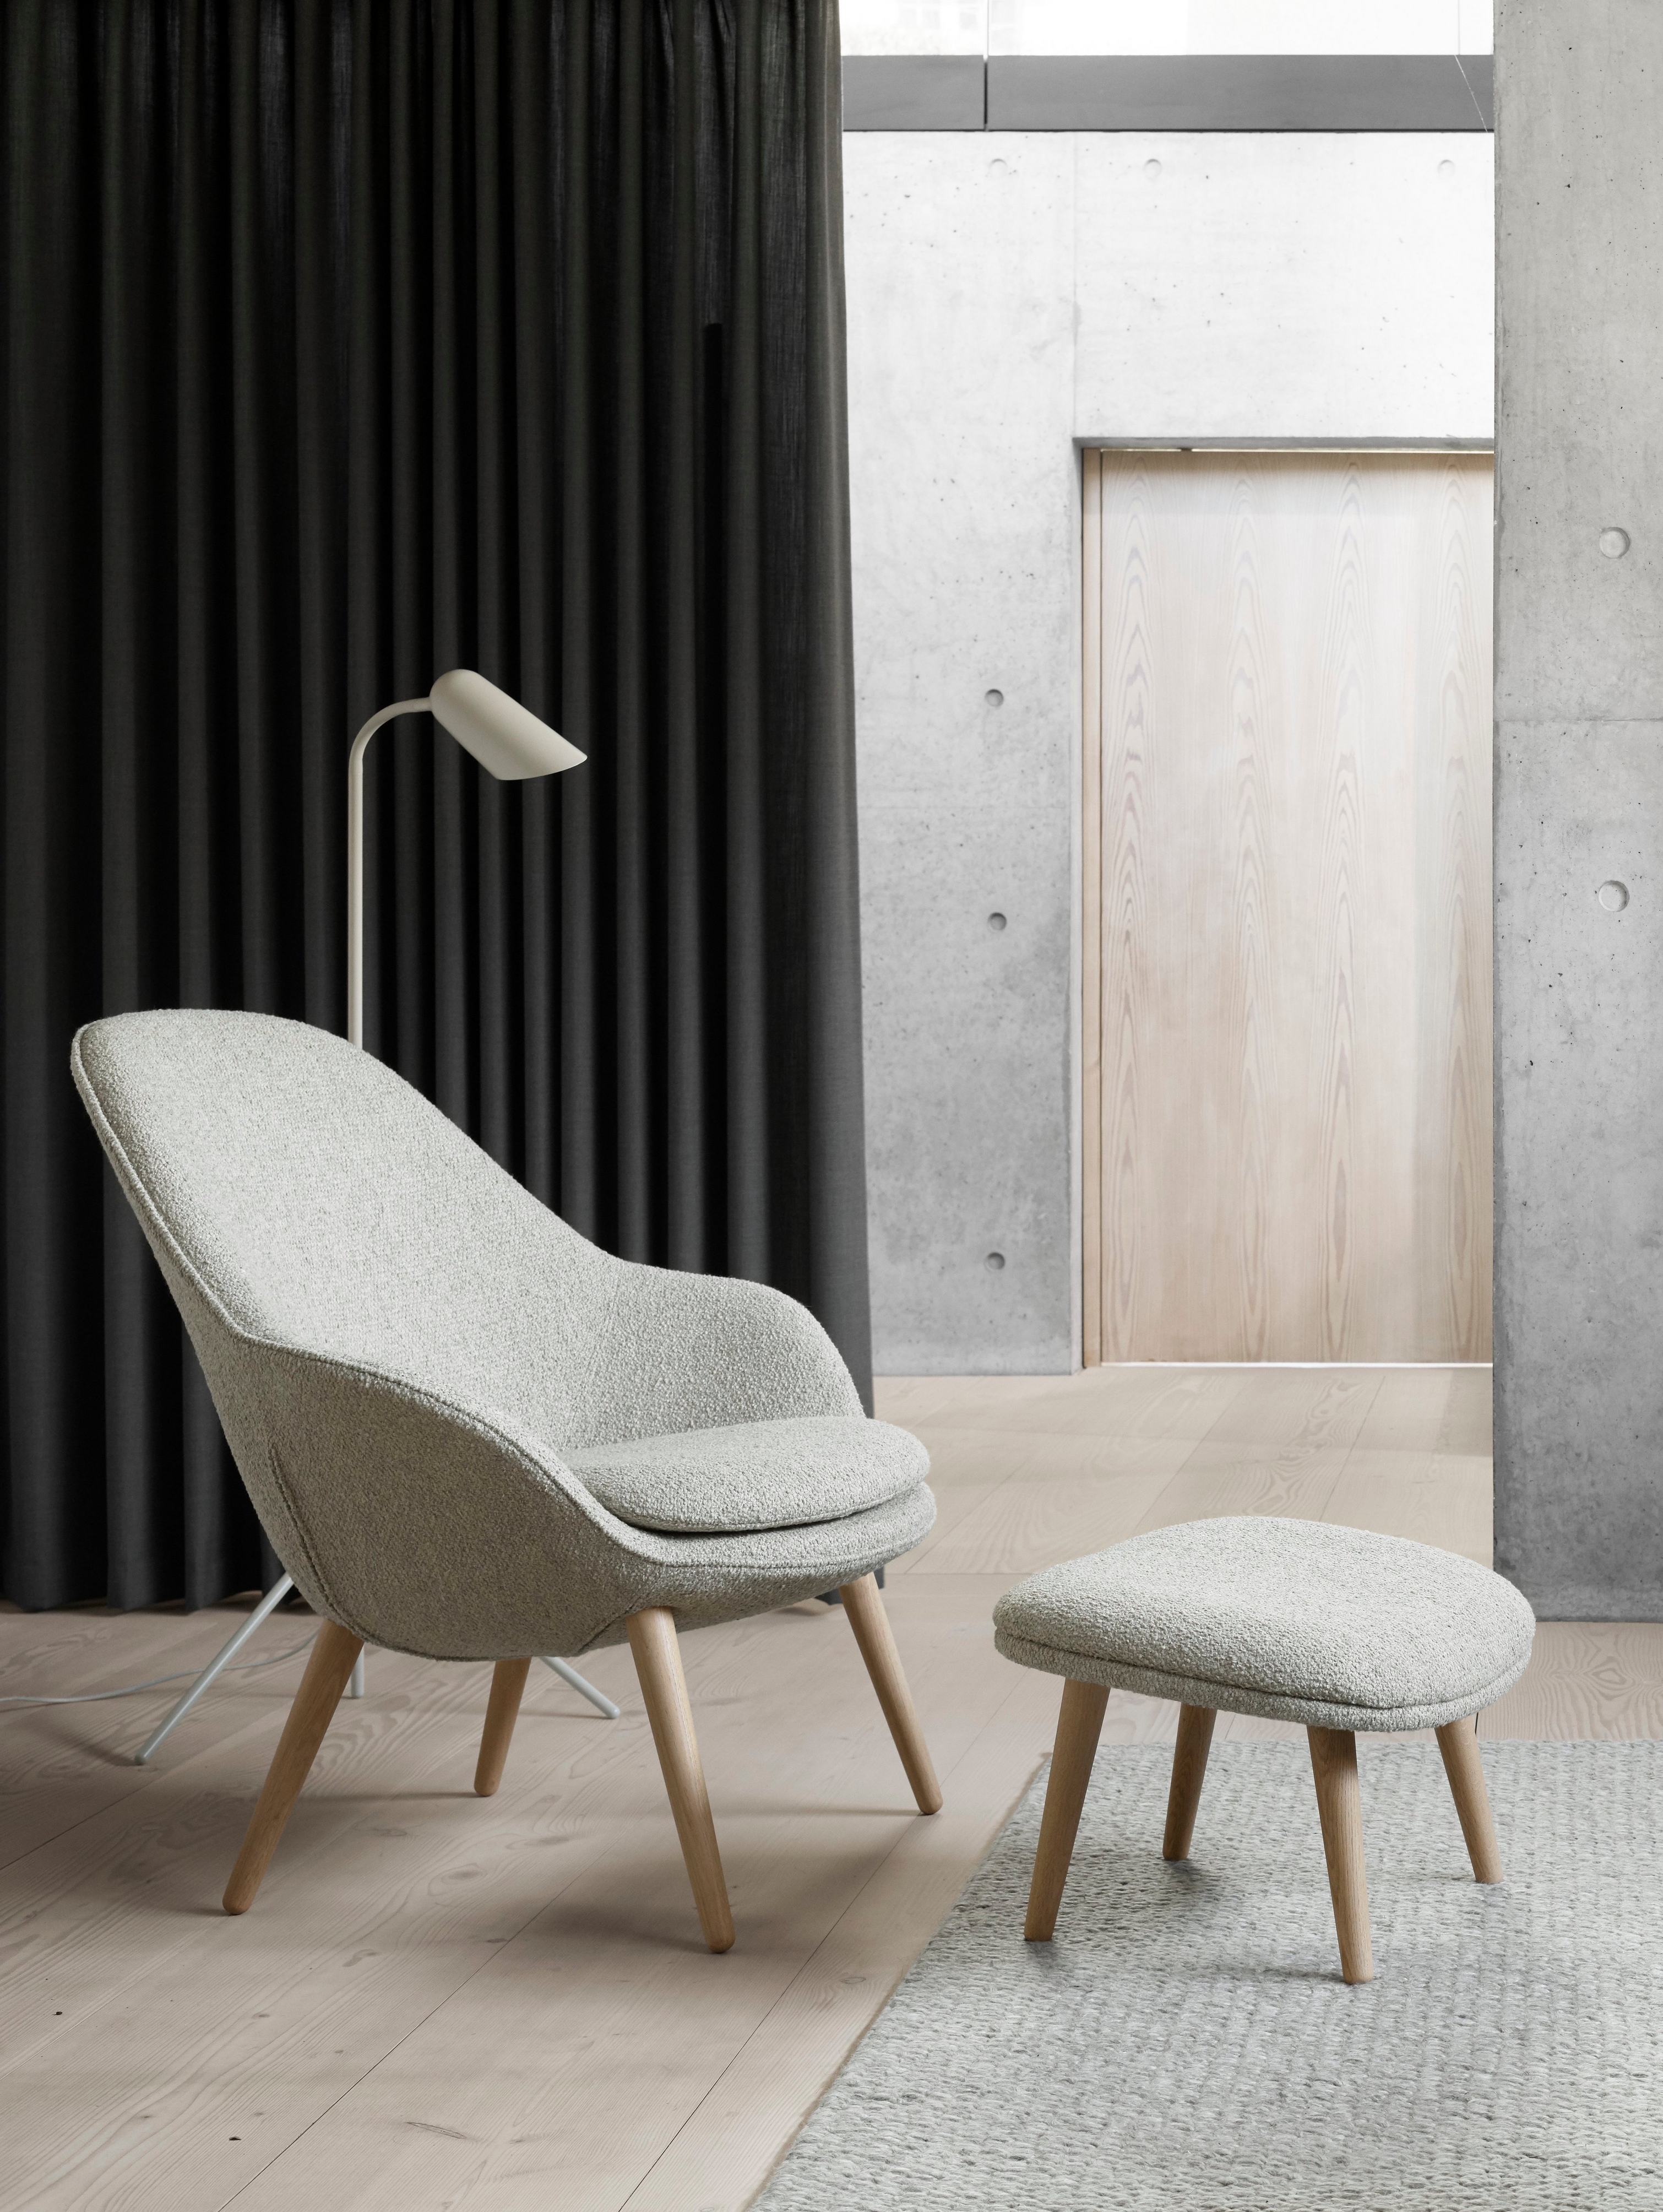 Adelaide living chair in beige Lazio fabric